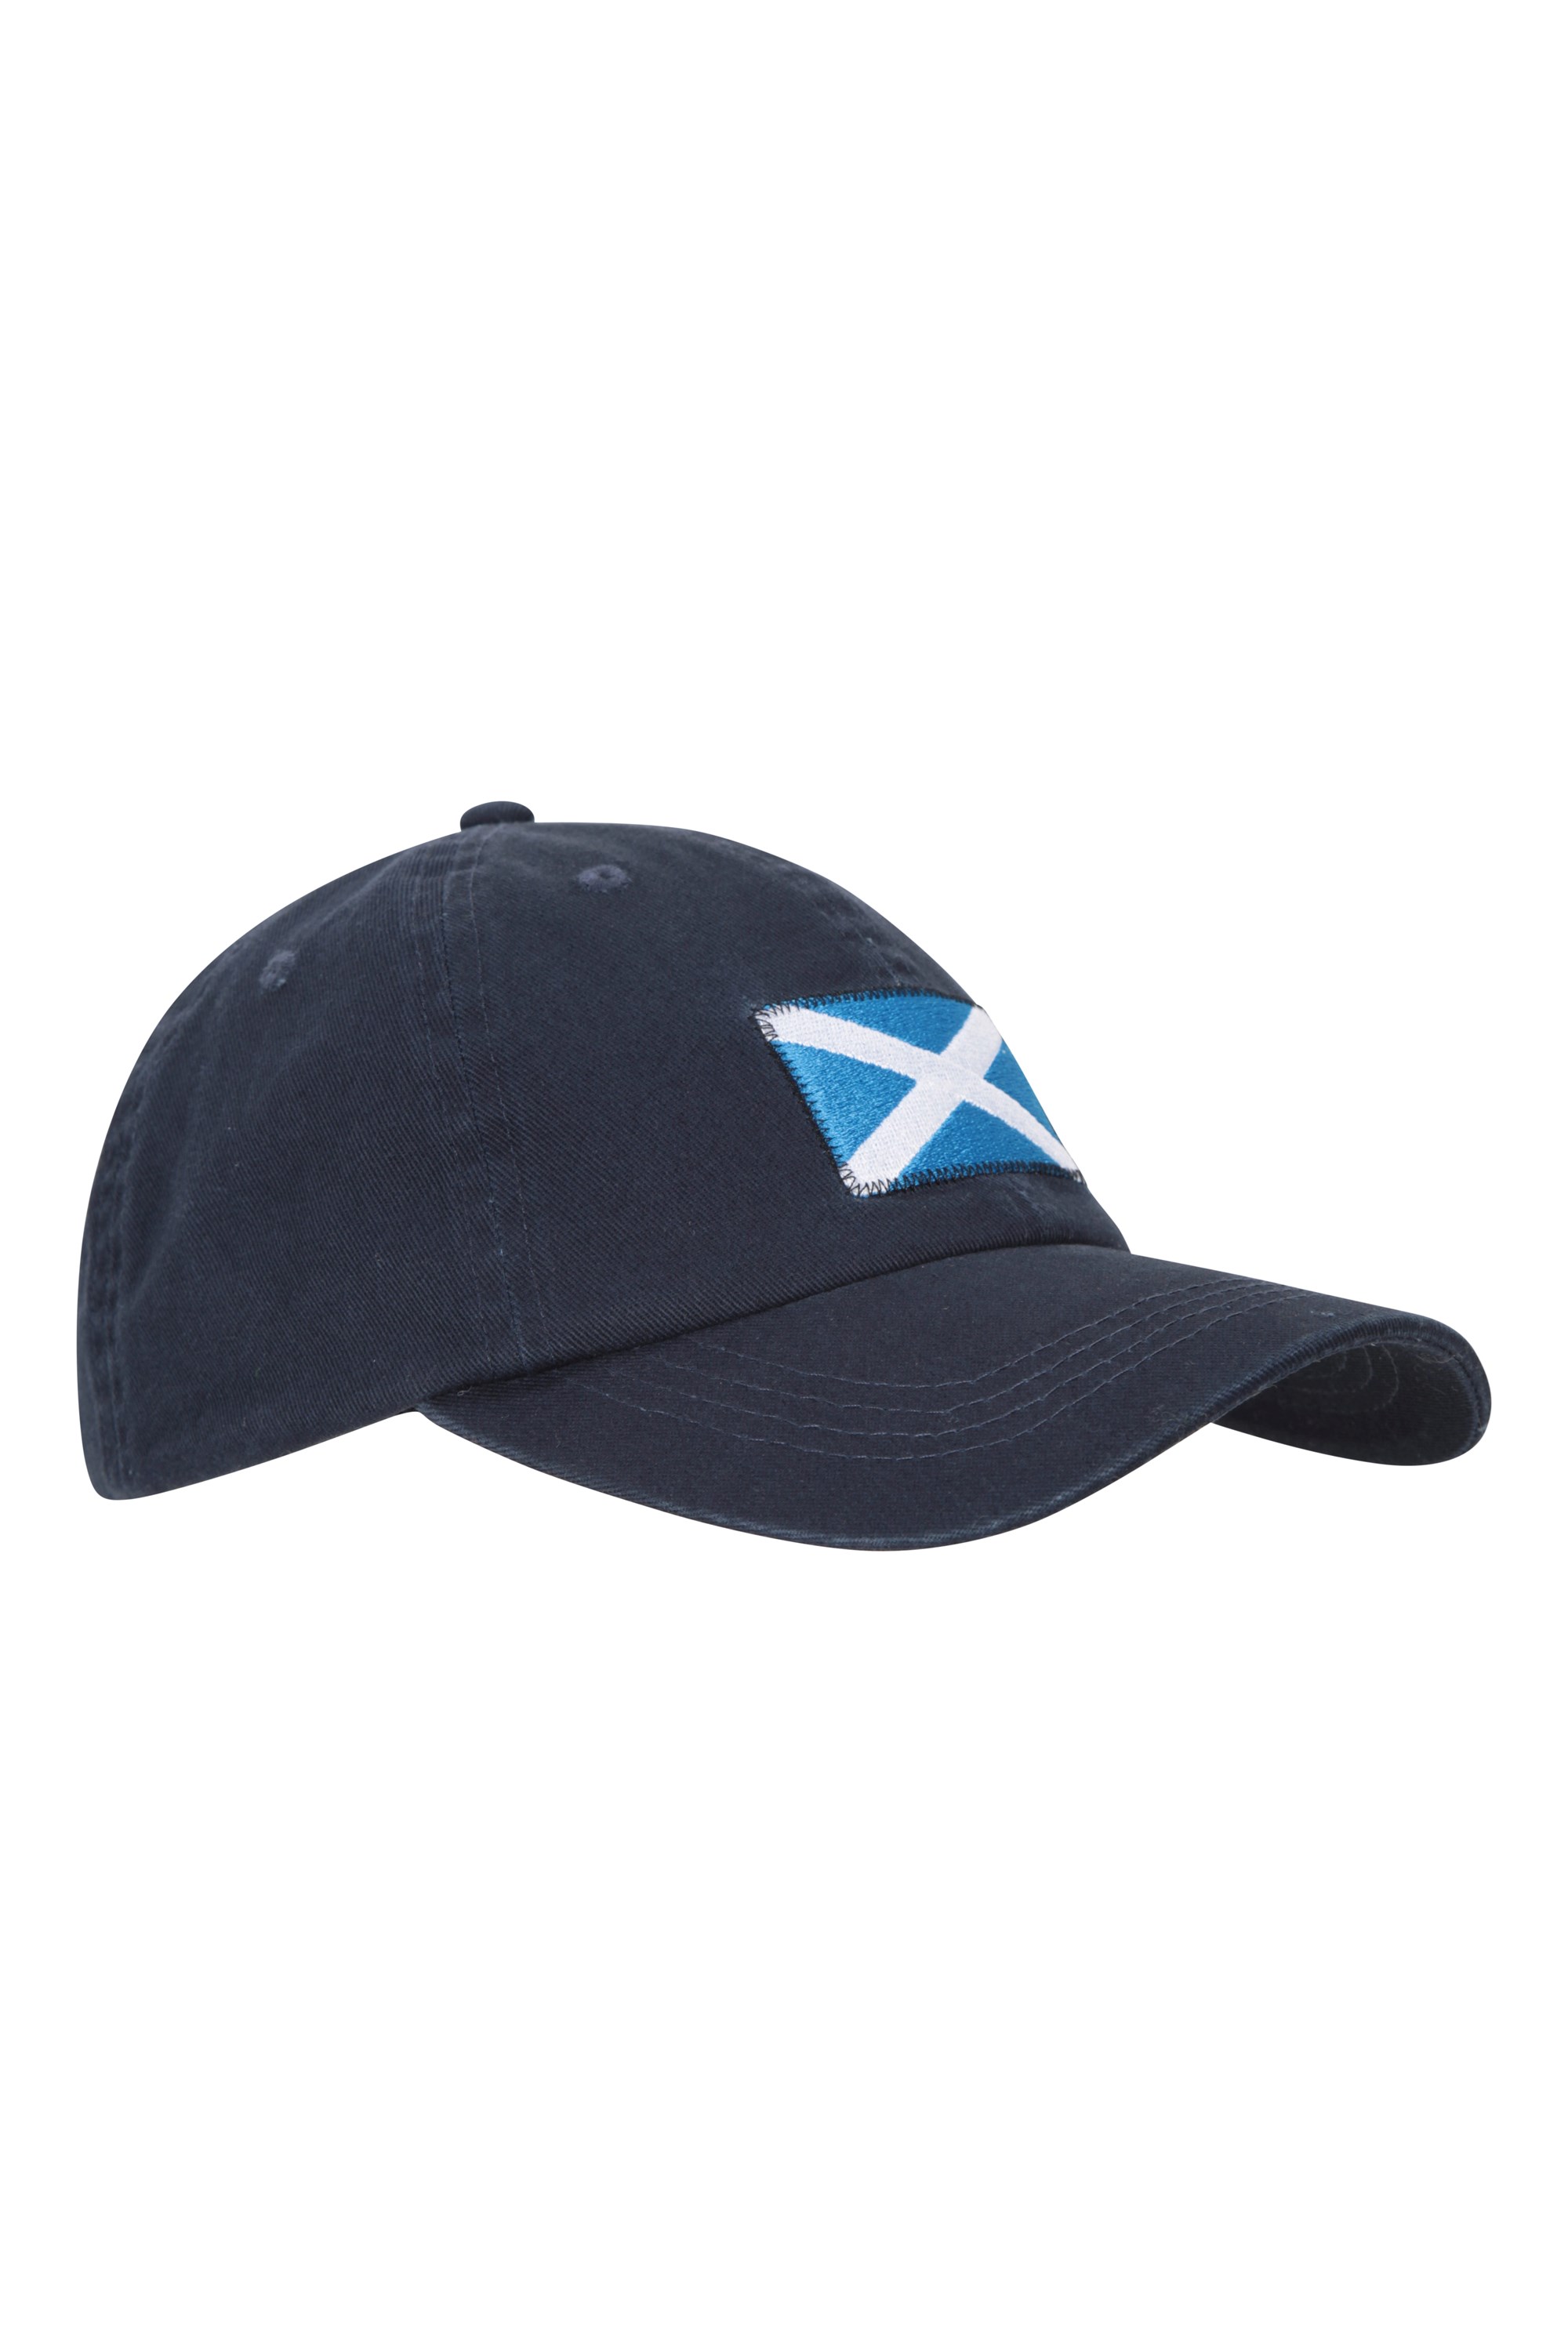 Scotland Baseball Cap - Navy